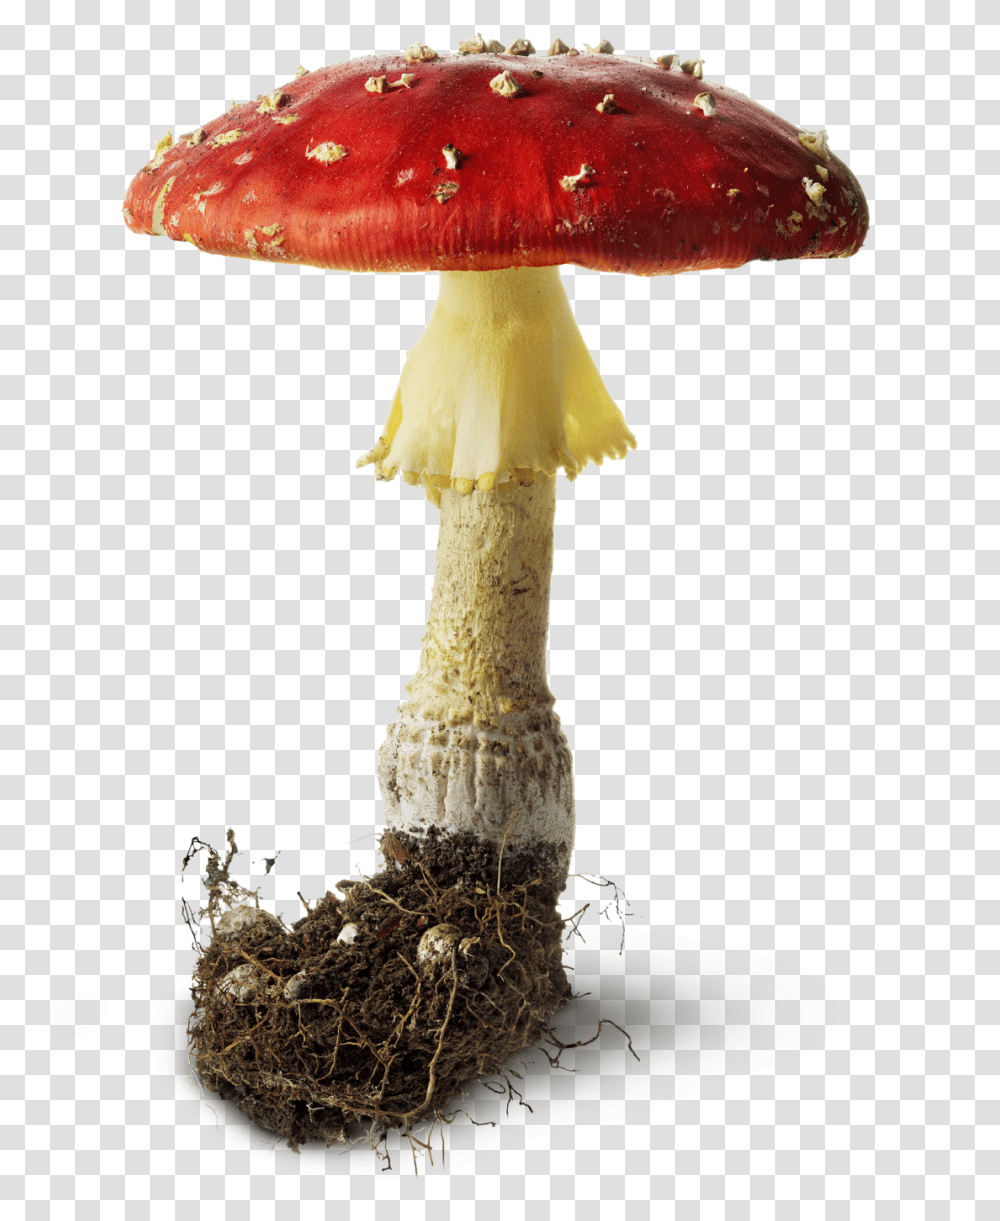 Mushrooms And Toadstools 42891 Free Icons And Hongo, Fungus, Plant, Amanita, Agaric Transparent Png